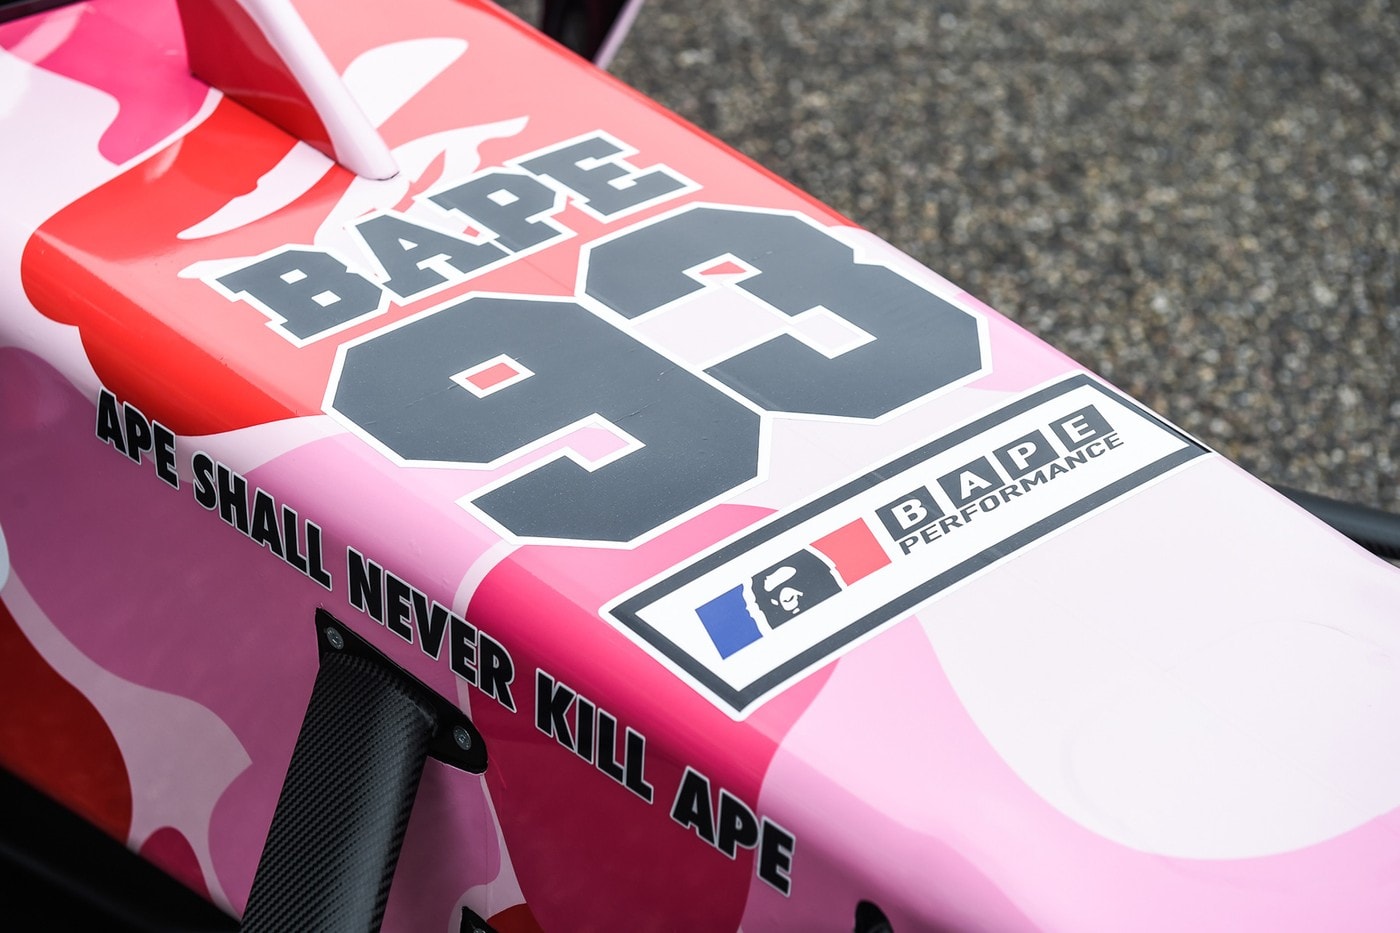 A BATHING APE® 攜手 Formula 1 打造粉紅迷彩樣式車型